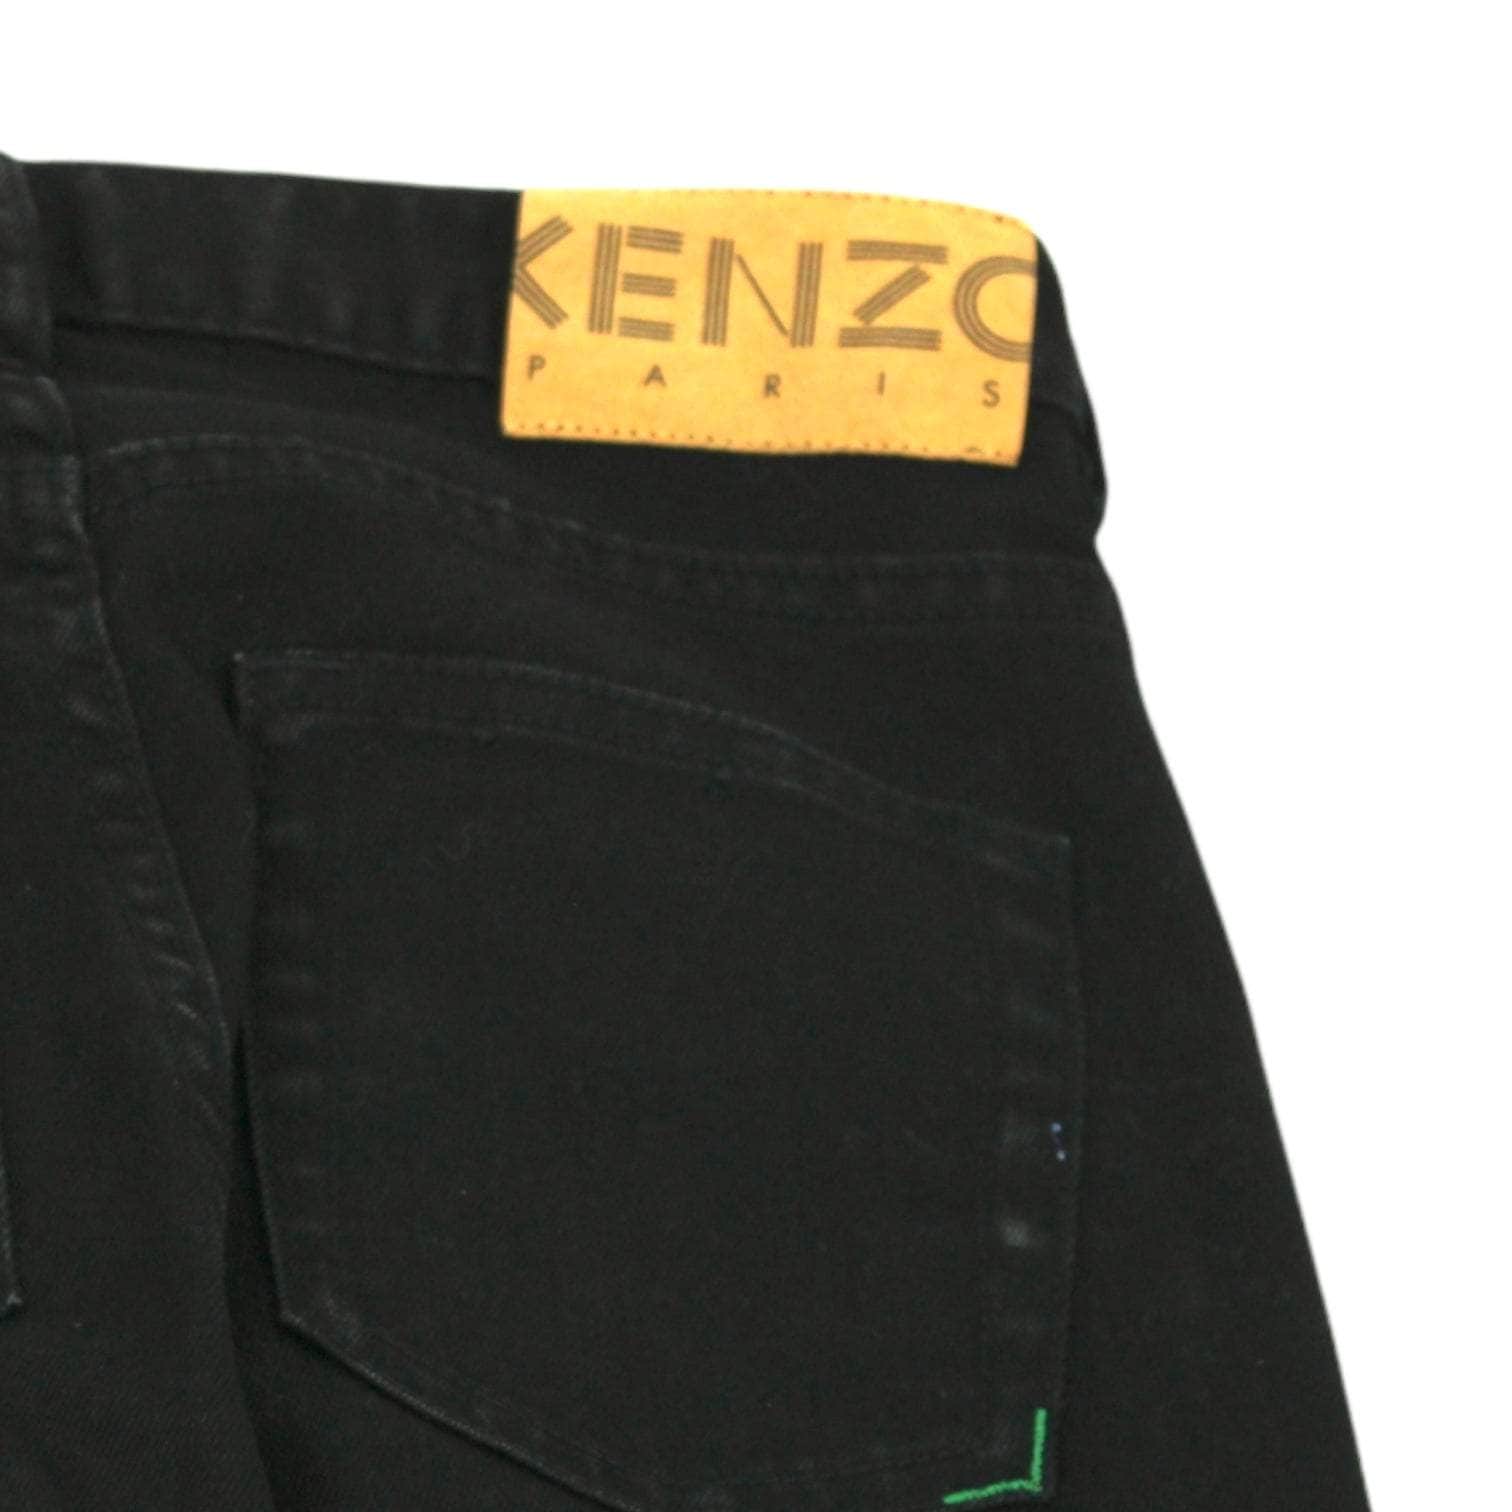 Kenzo Black Skinny Fit Jeans